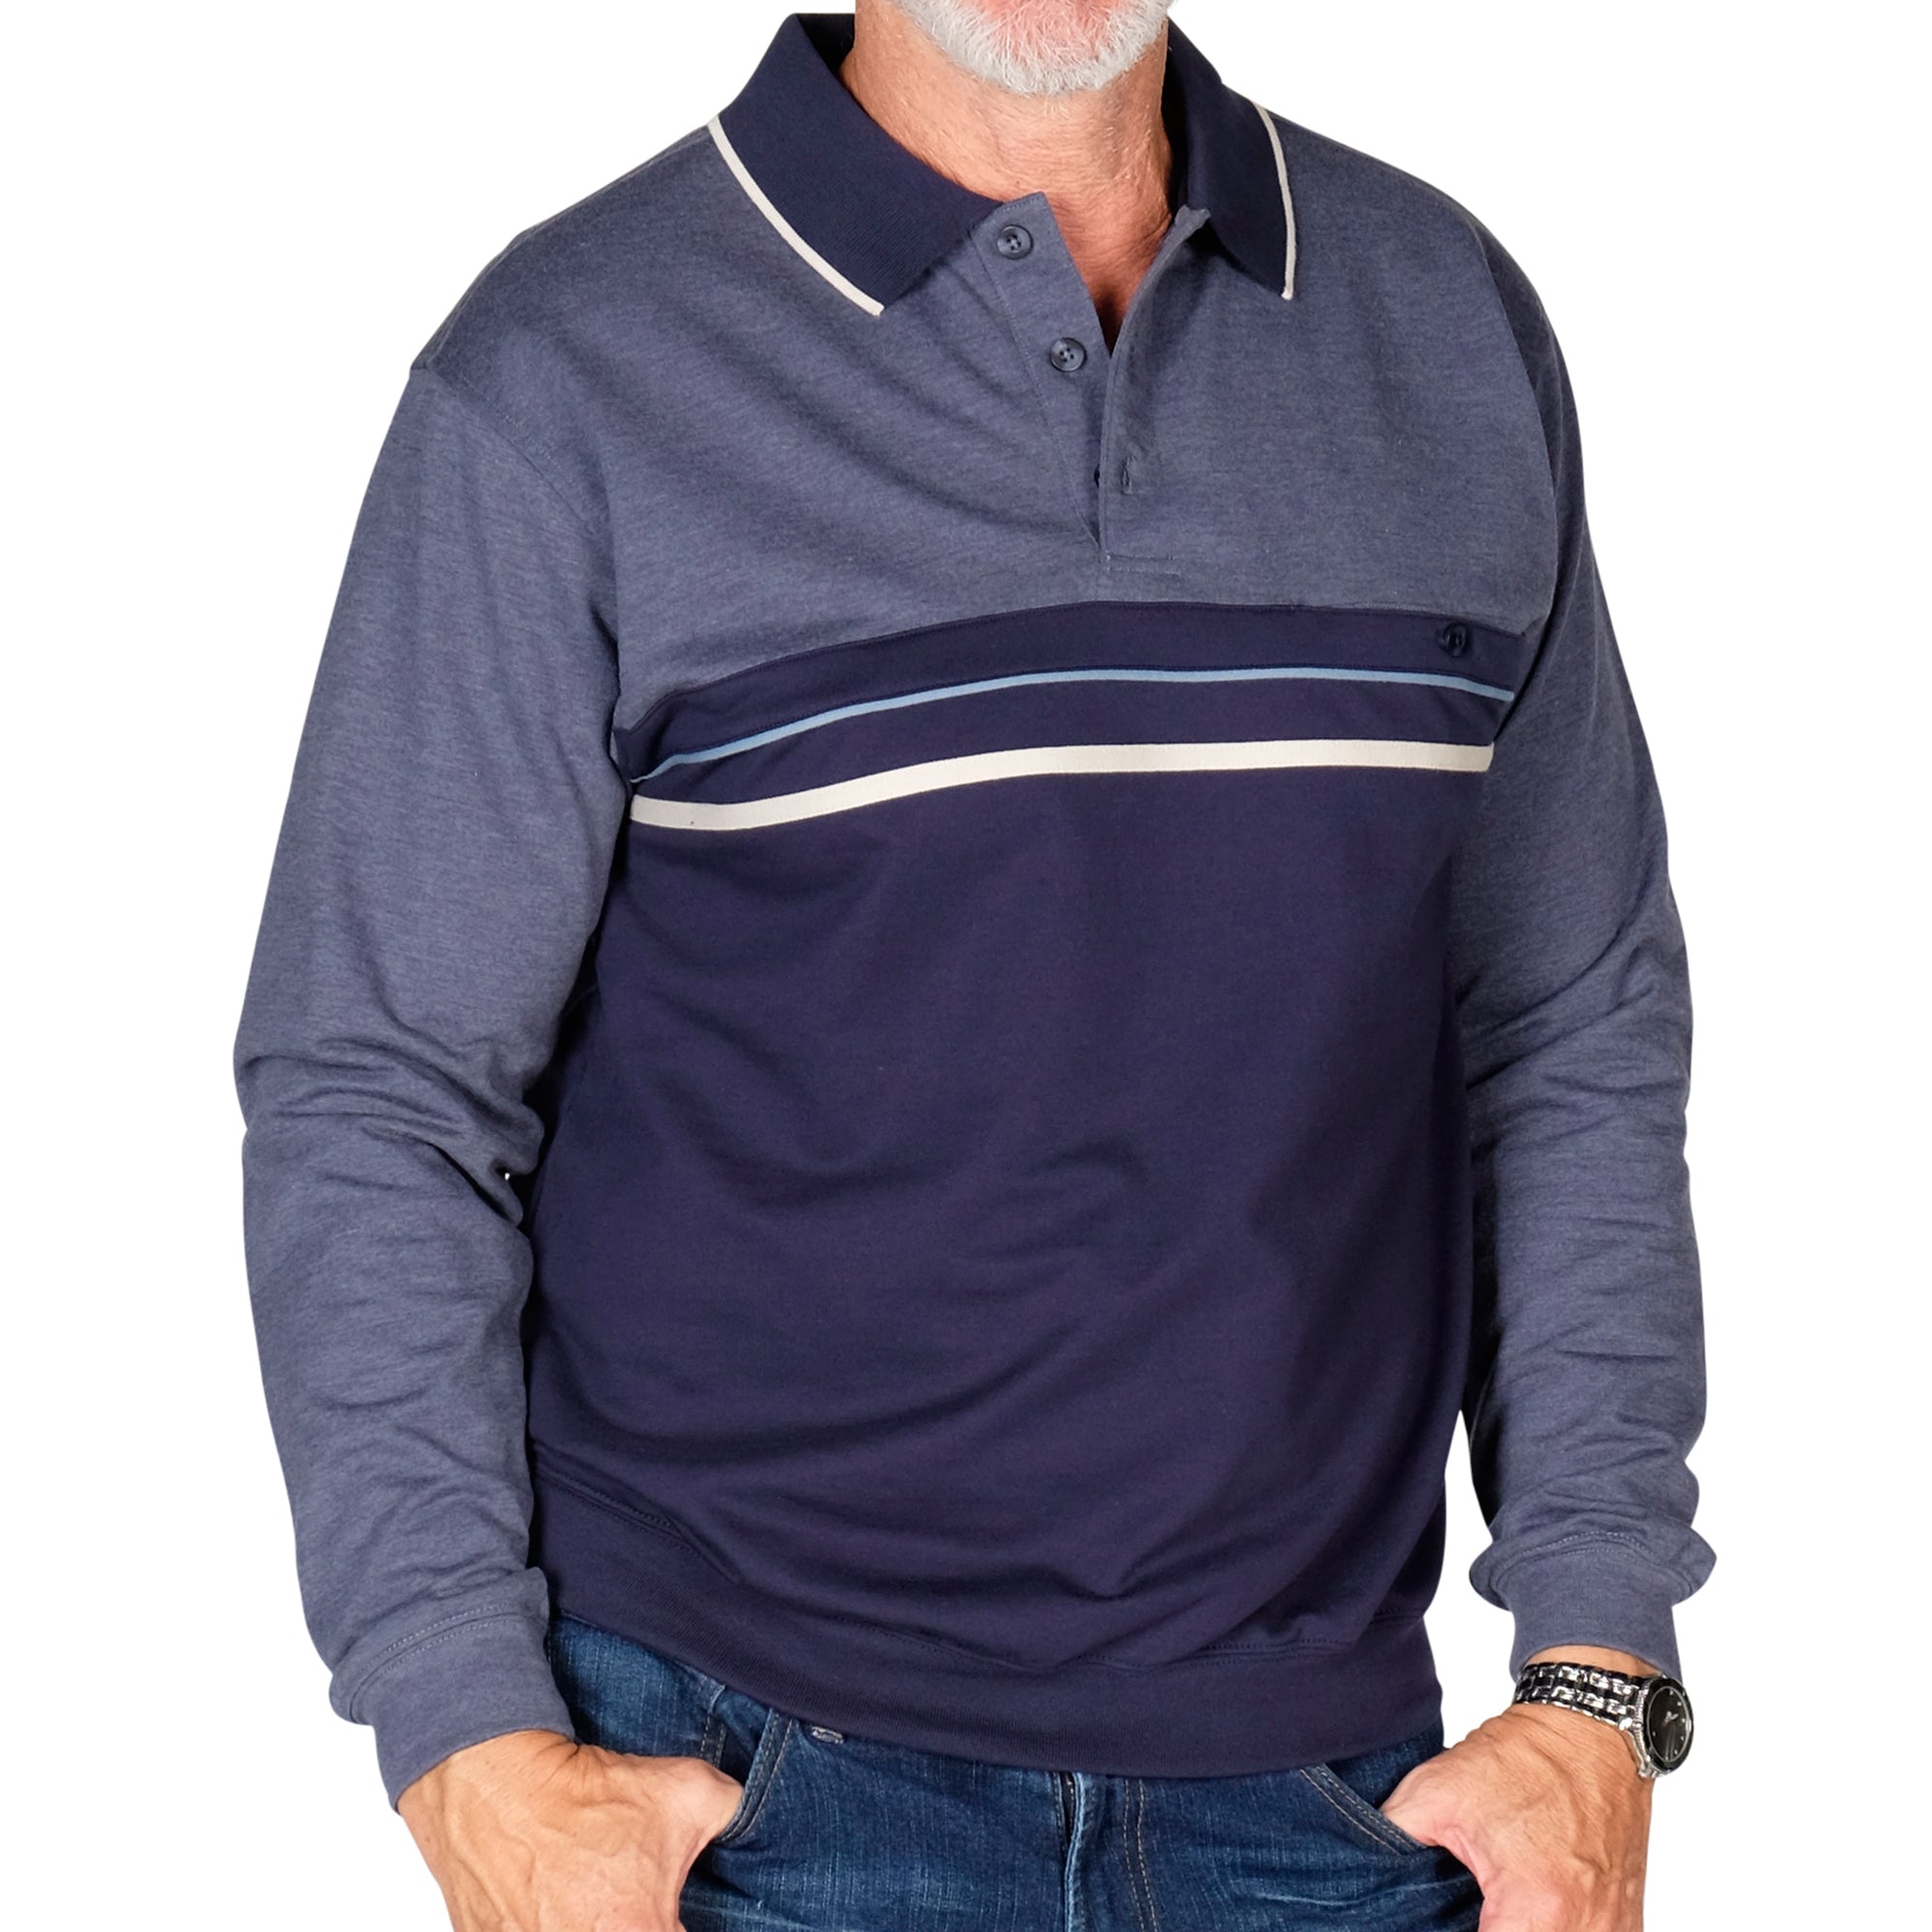 Classics by Palmland Long Sleeve Banded Bottom Shirt 6198-307 Navy